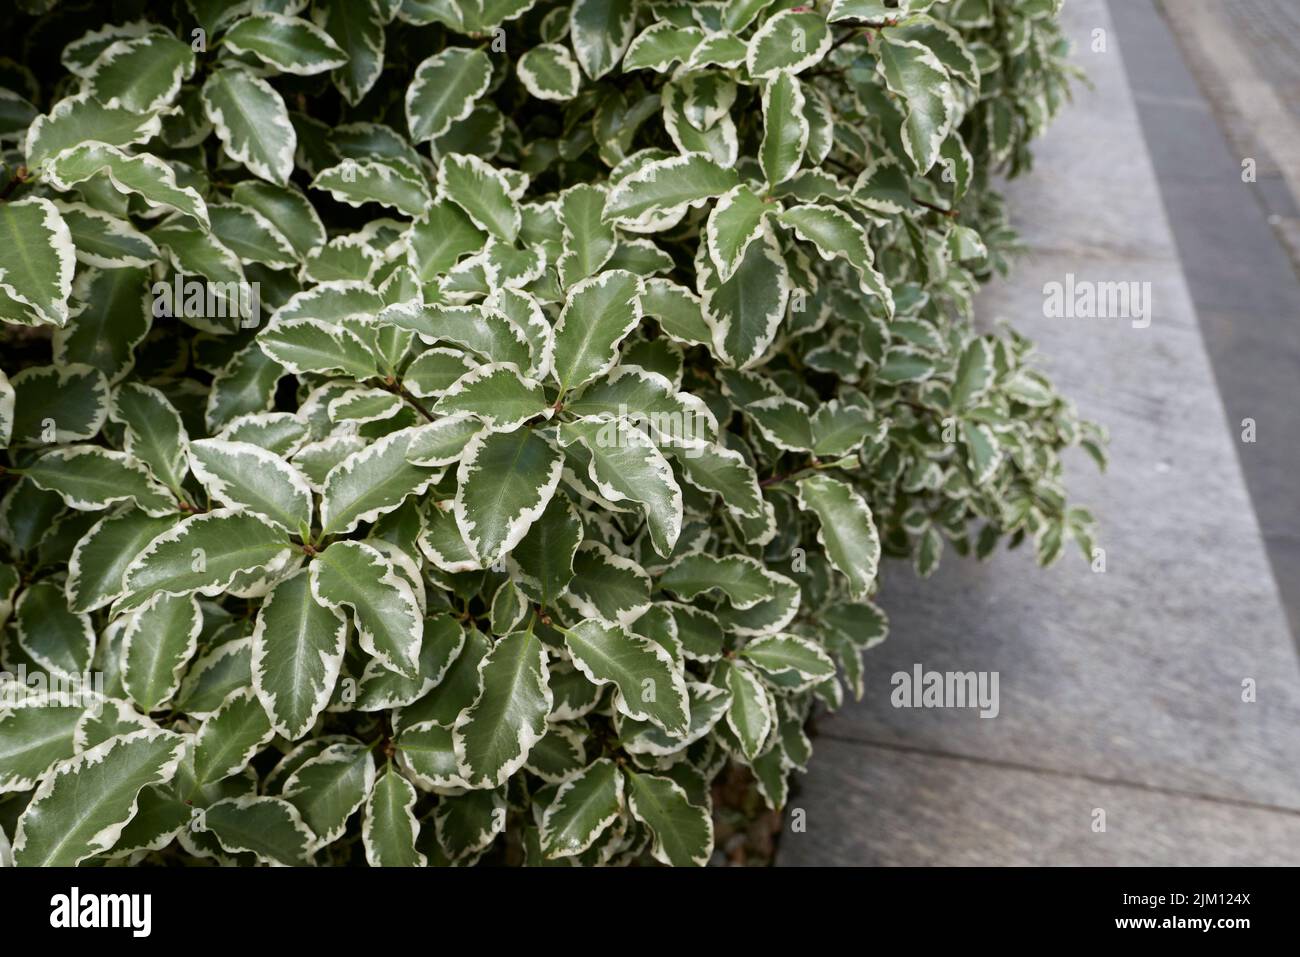 Pittosporum tenuifolium variegated leaves Stock Photo